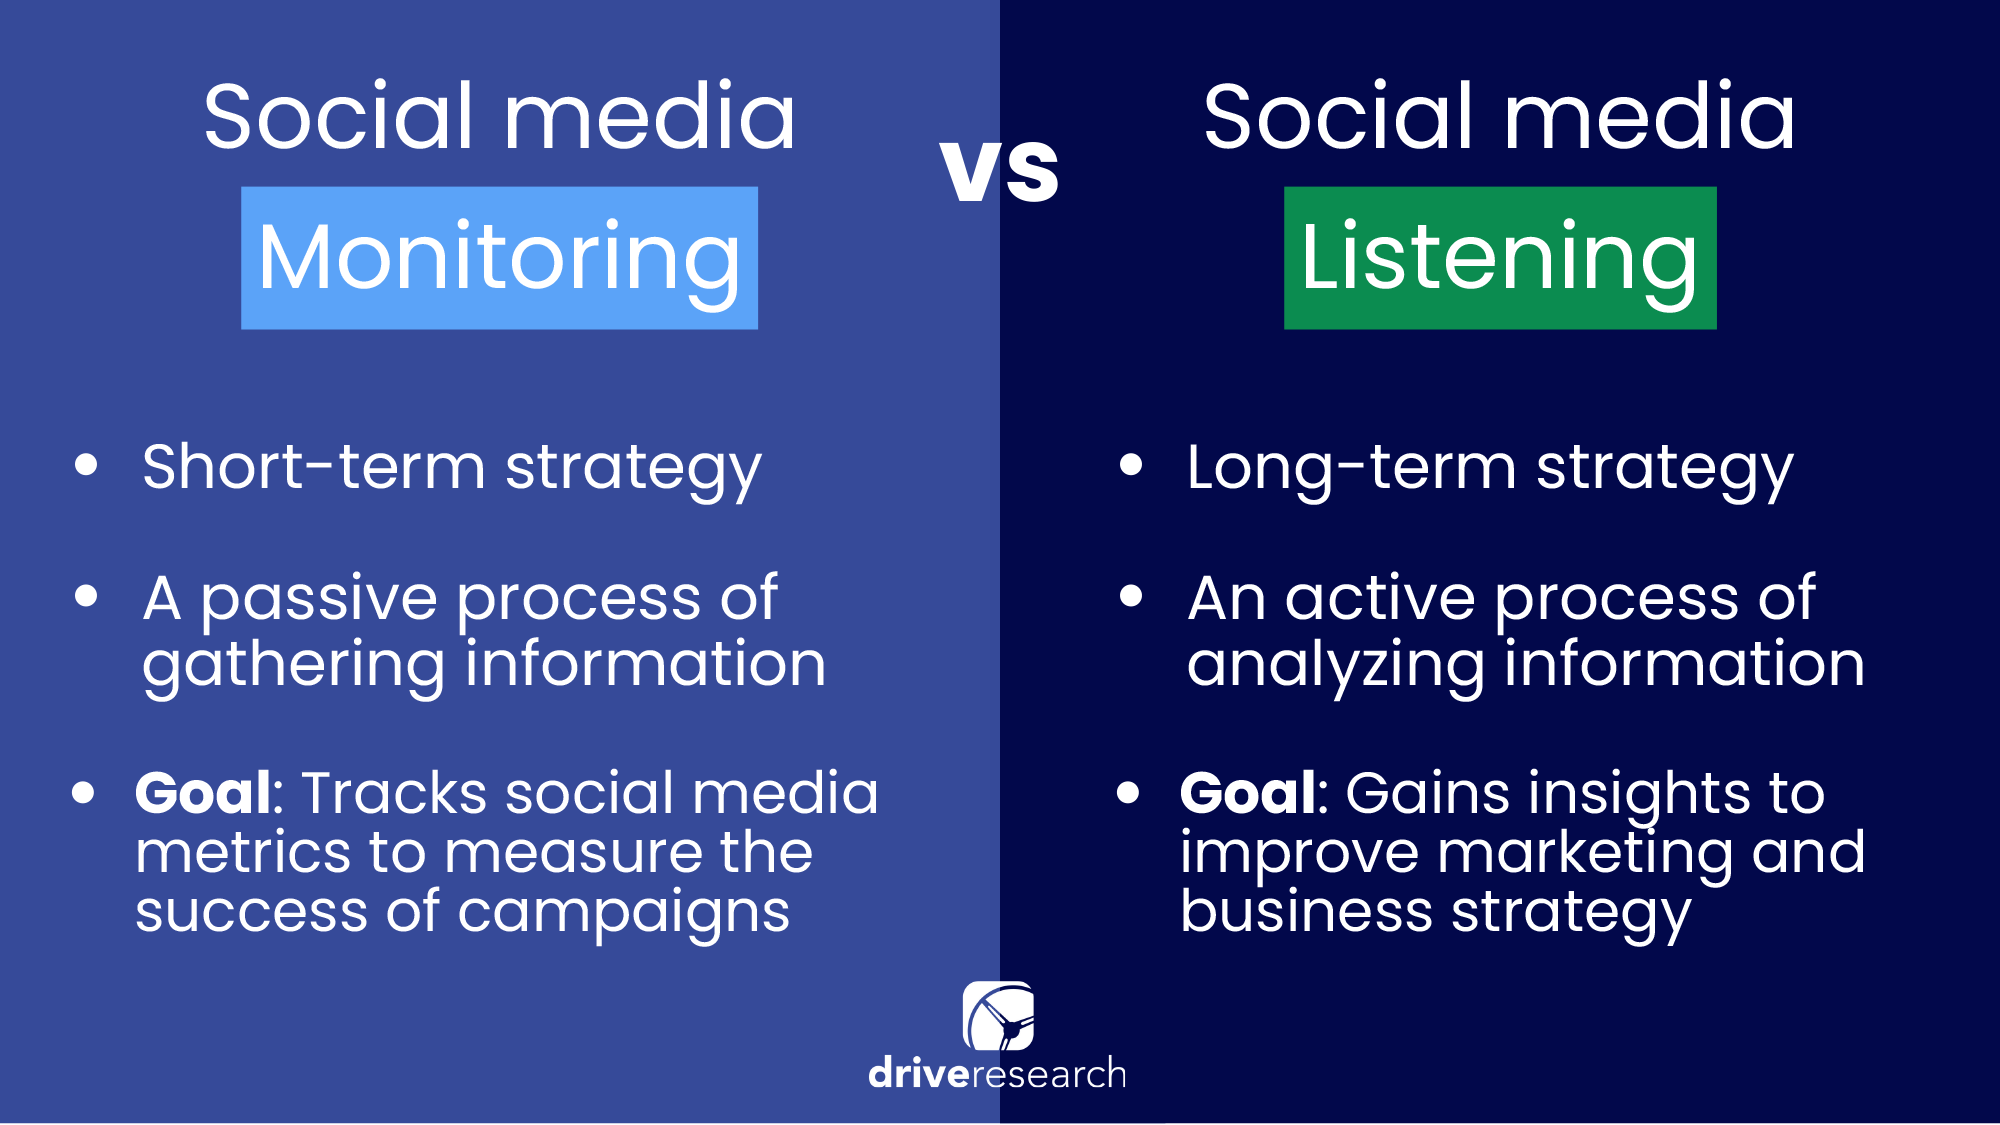 Social listening and social monitoring